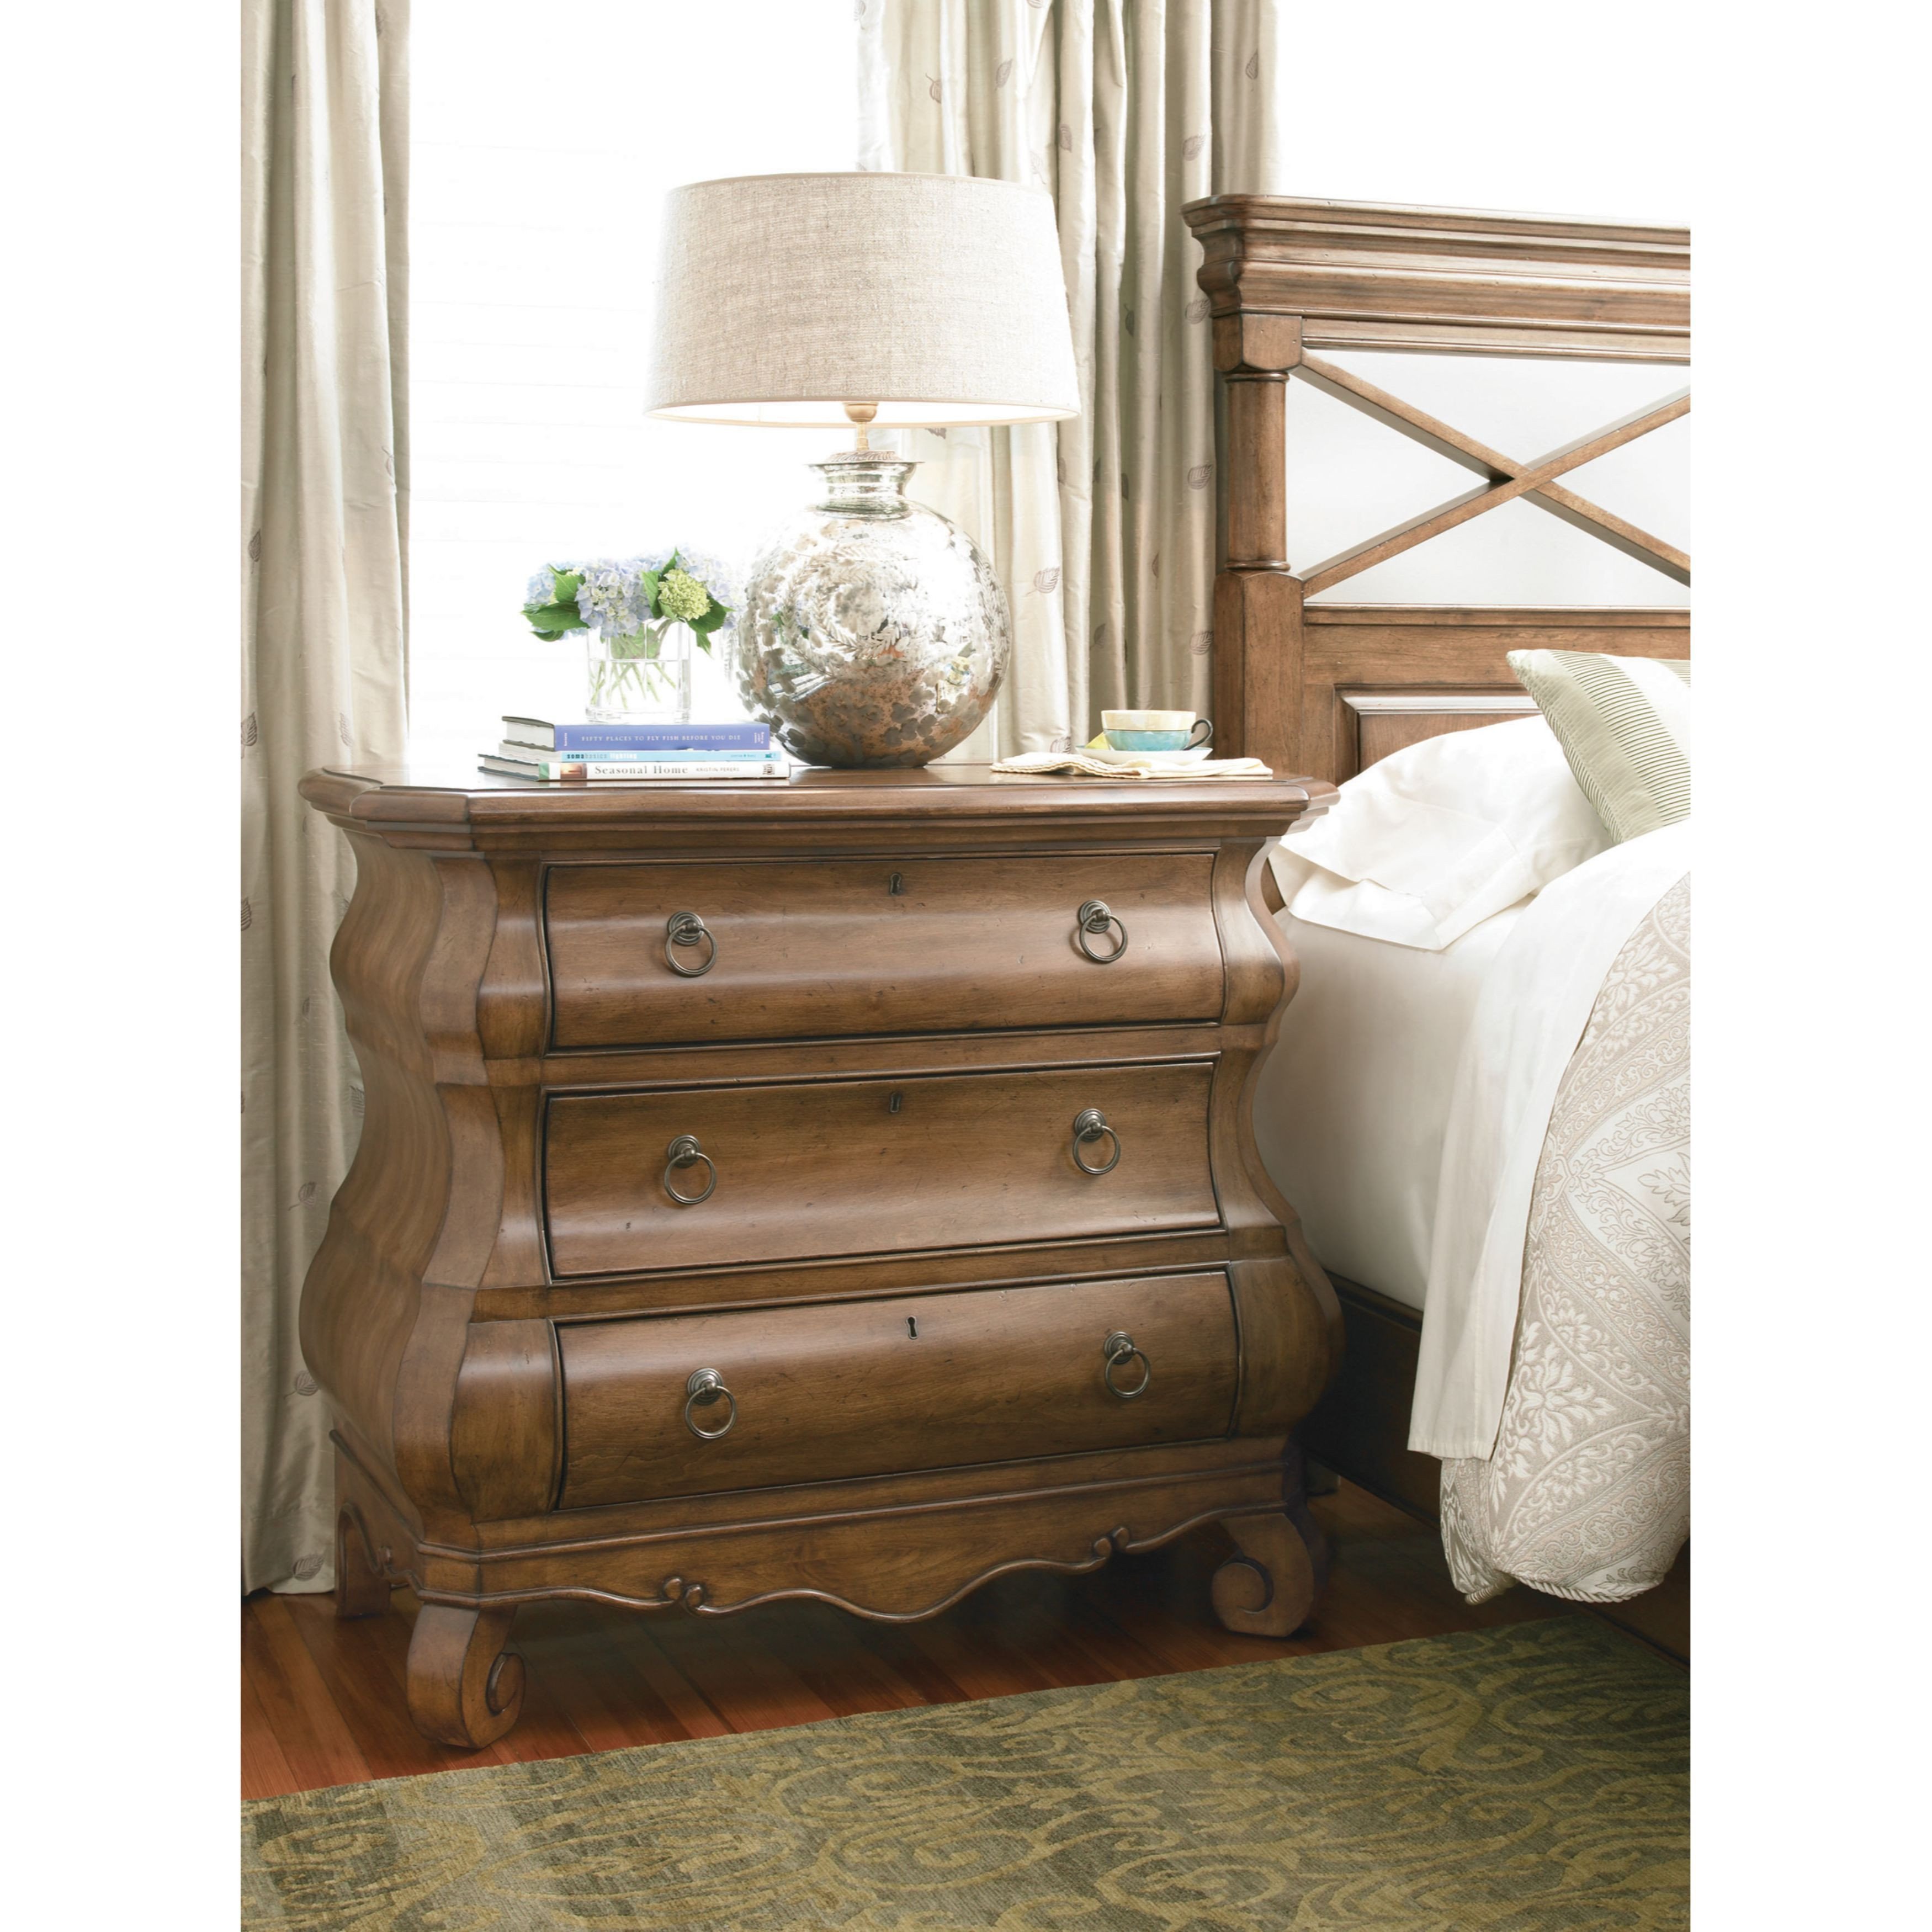 Pennsylvania House Bedroom Furniture Lovely Pennsylvania House Louie P S Cognac Chest Dresser Brown